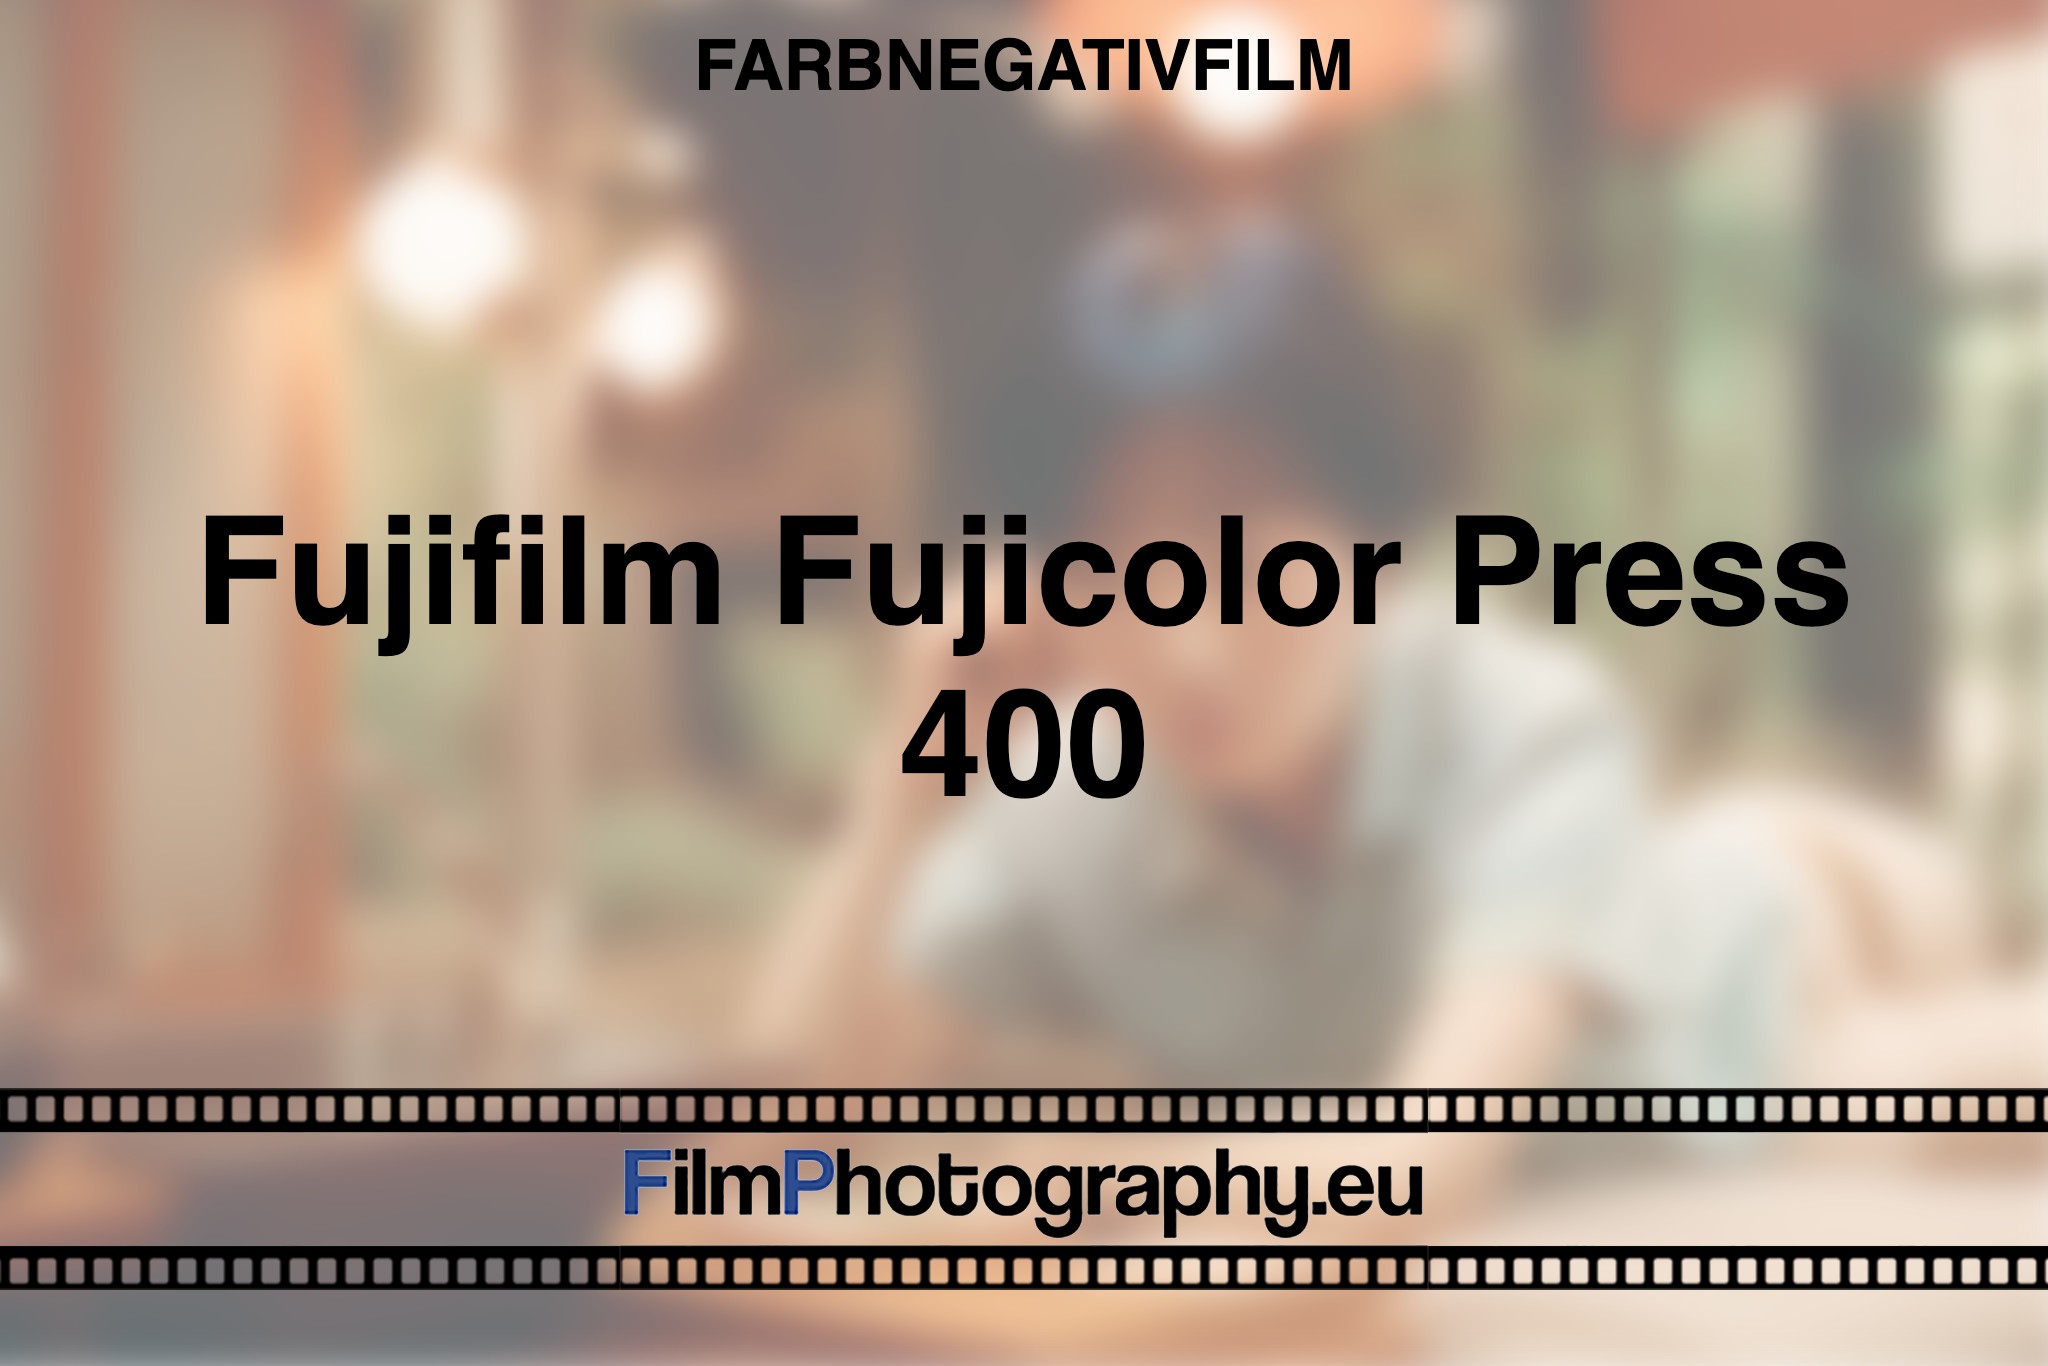 fujifilm-fujicolor-press-400-farbnegativfilm-bnv